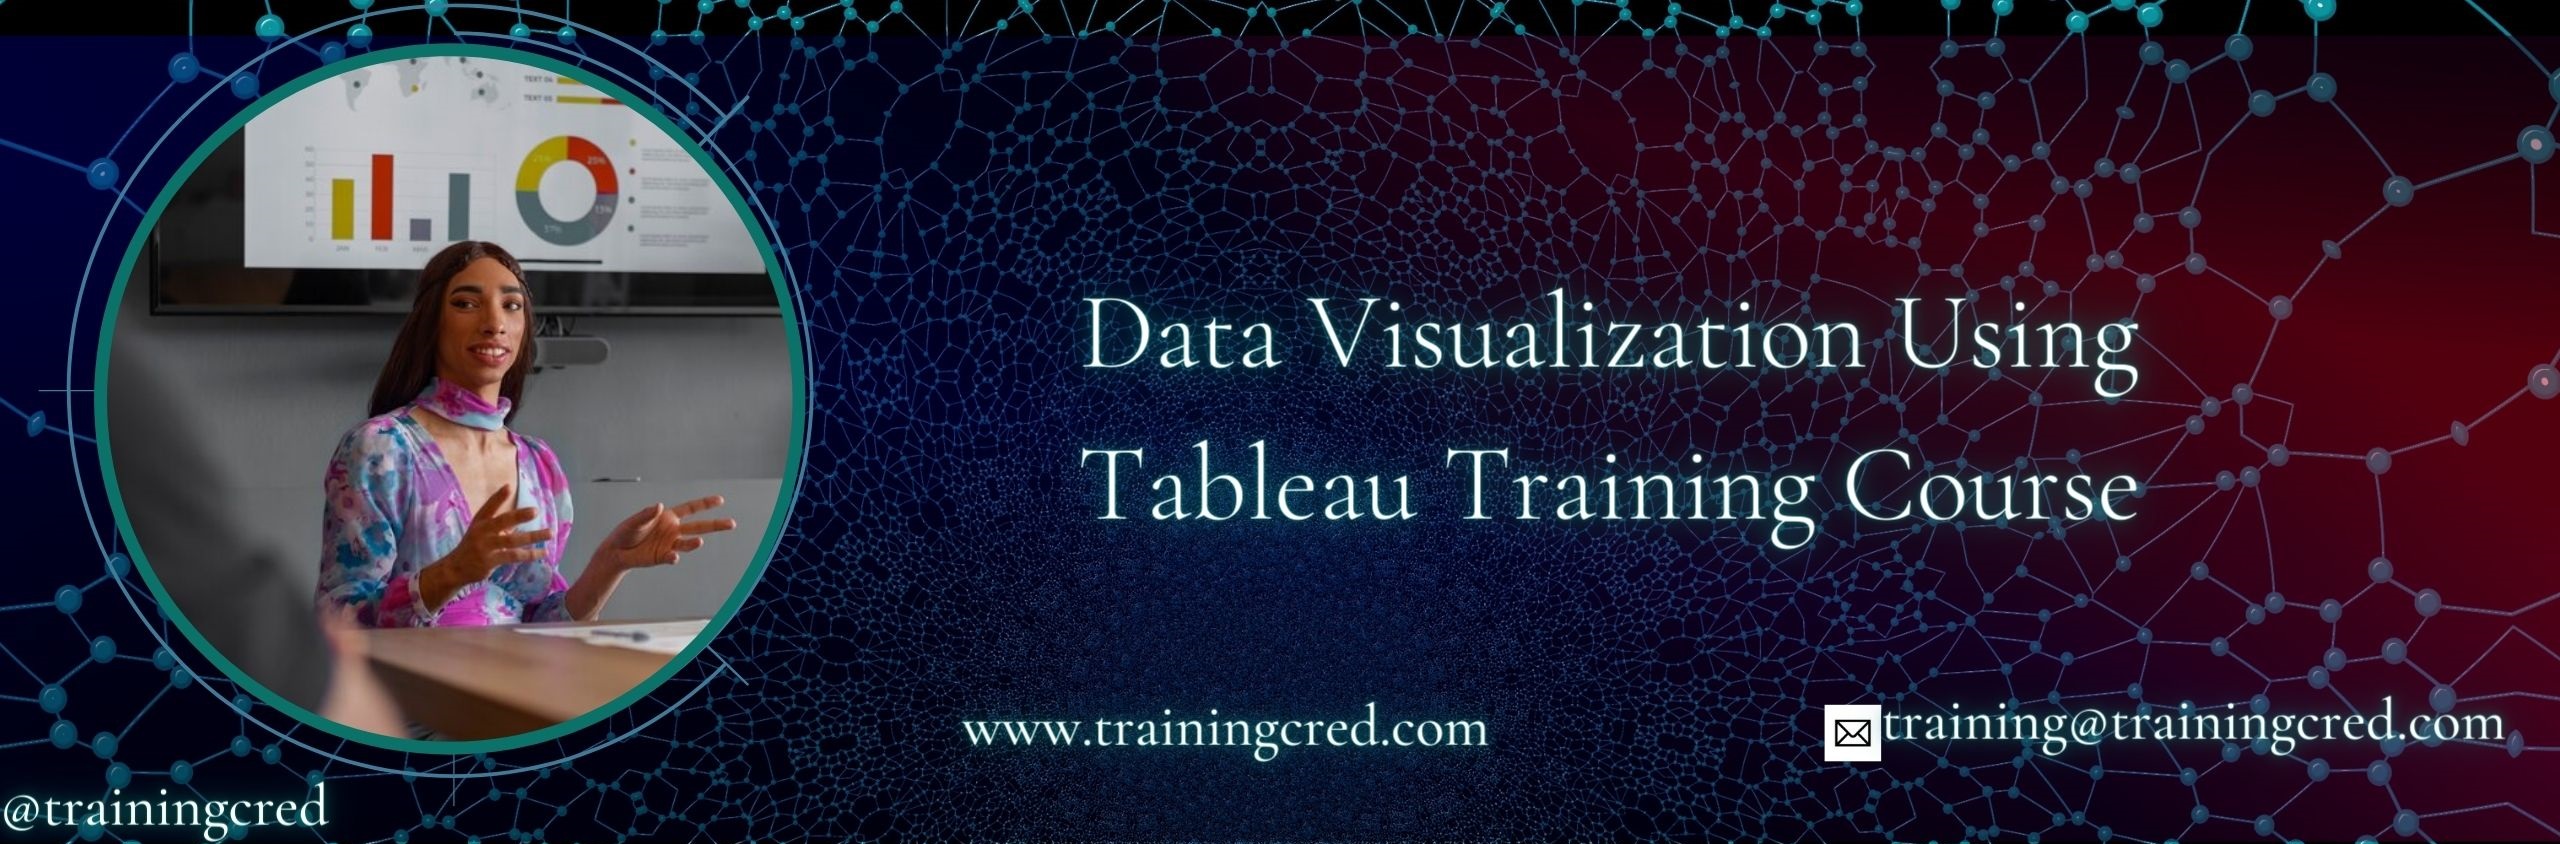 Data Visualization Using Tableau Training